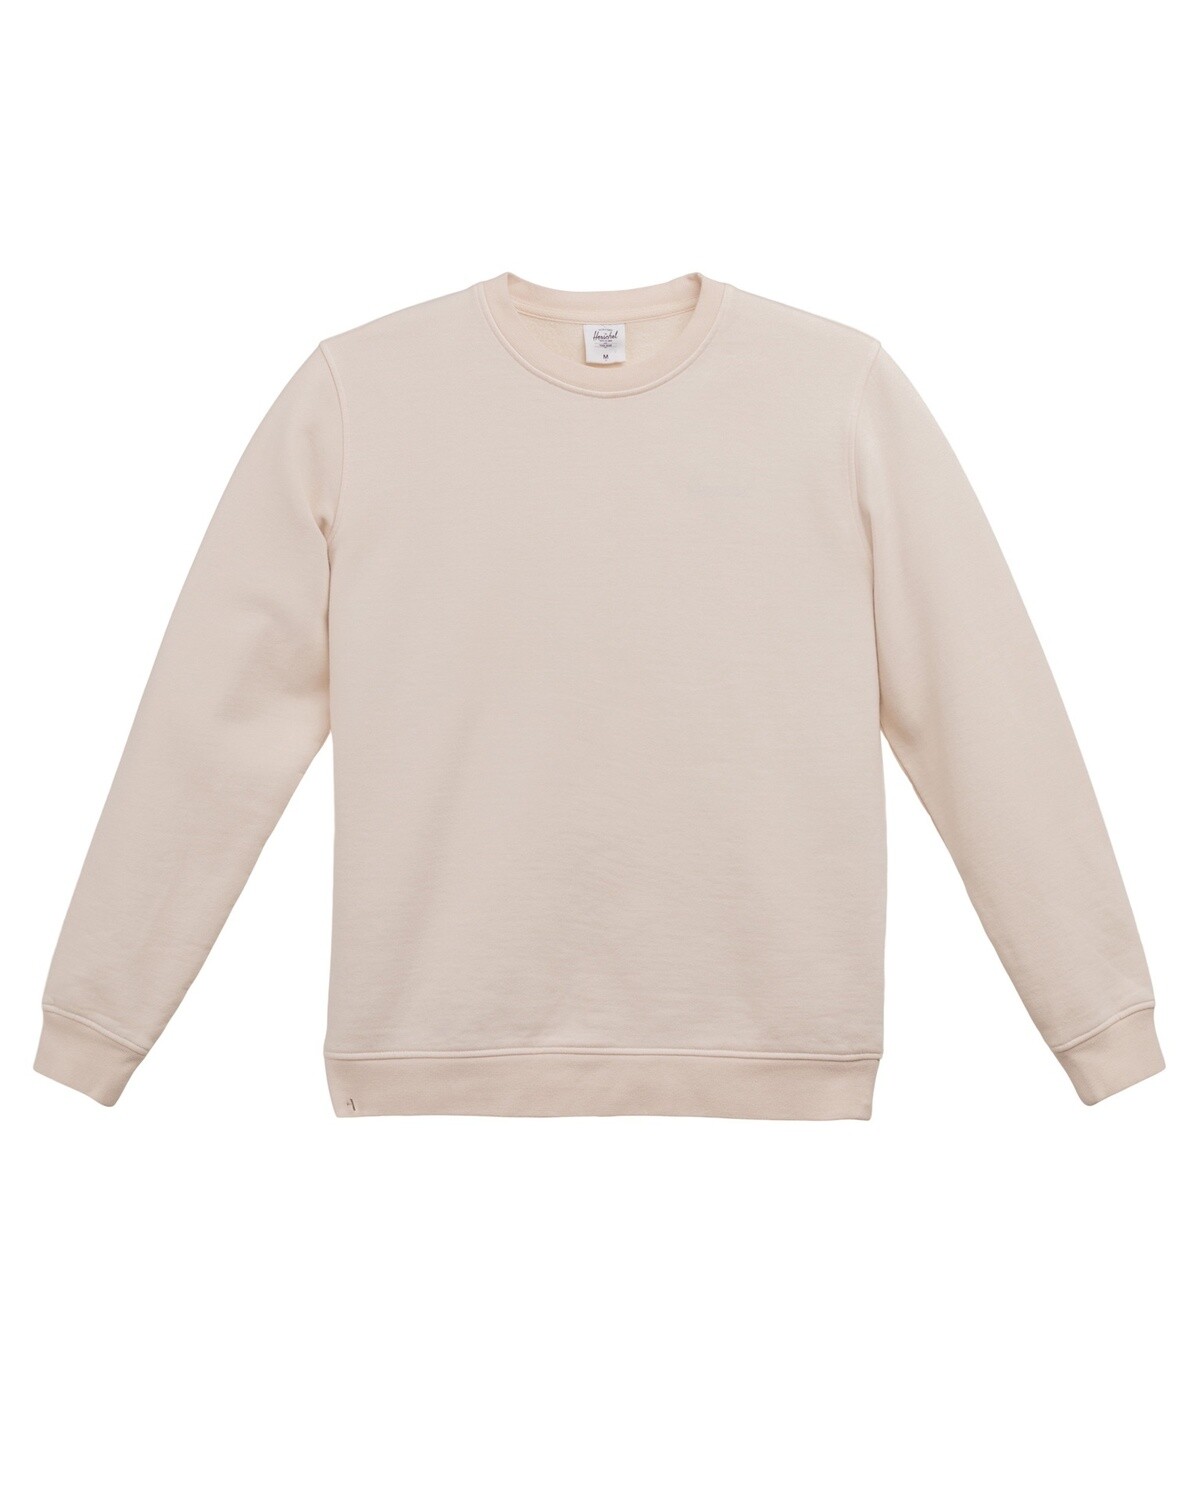 Basic Crew Sweater, Colour: Moonbeam, Size: S